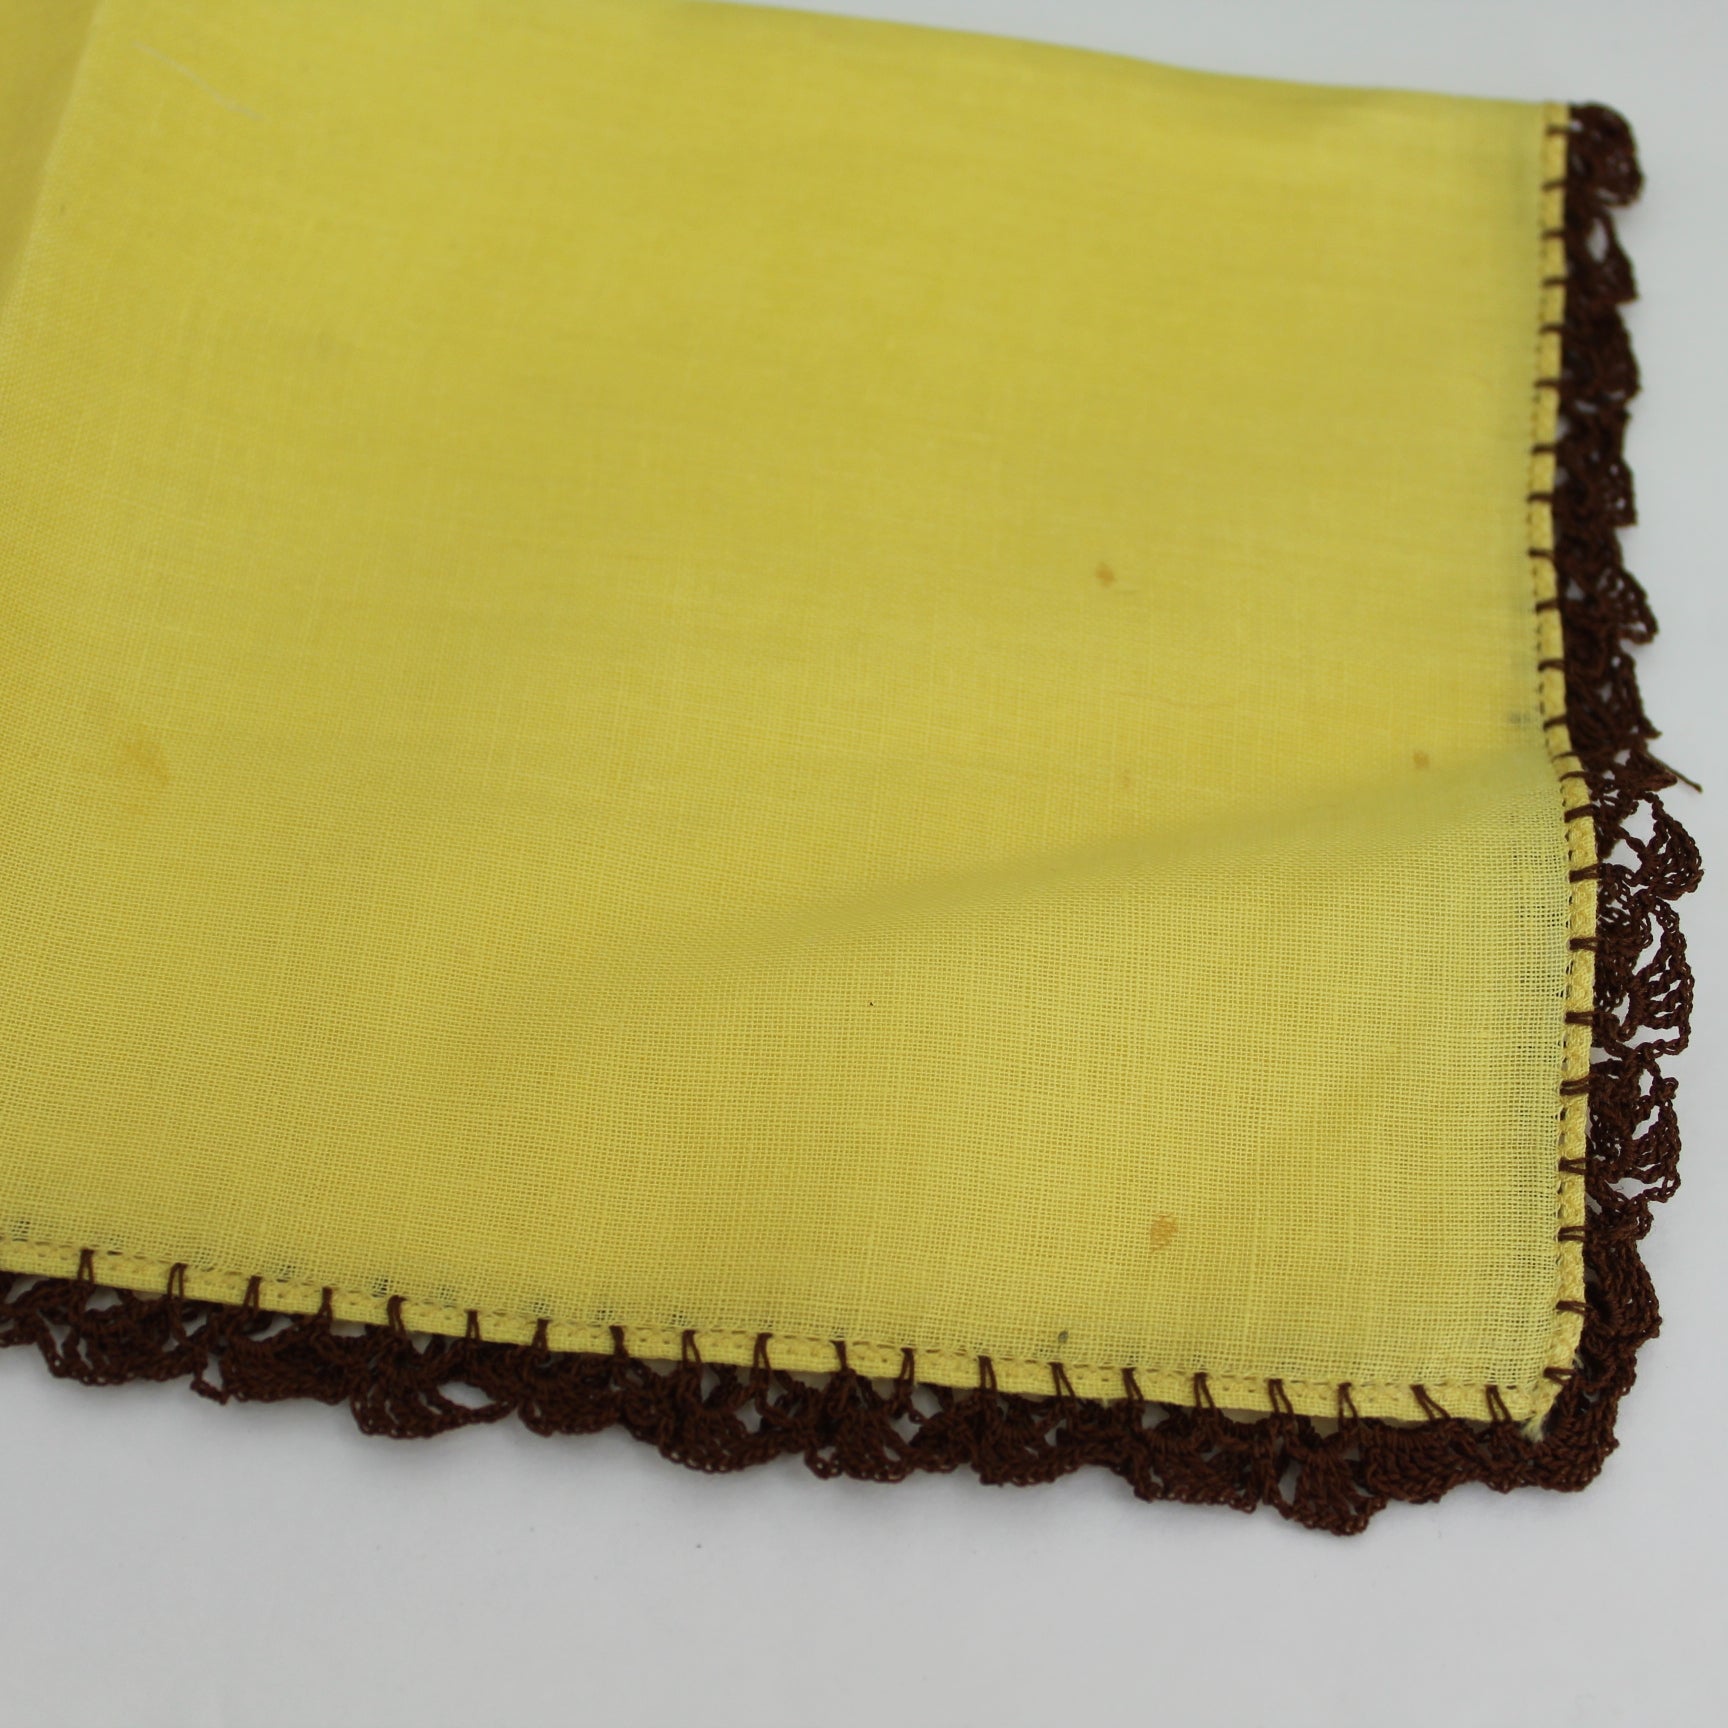 Crochet Corner Handkerchief Yellow Brown Aqua Flower Hand Edging DIY Clothing Crafts closeup showing packing spots